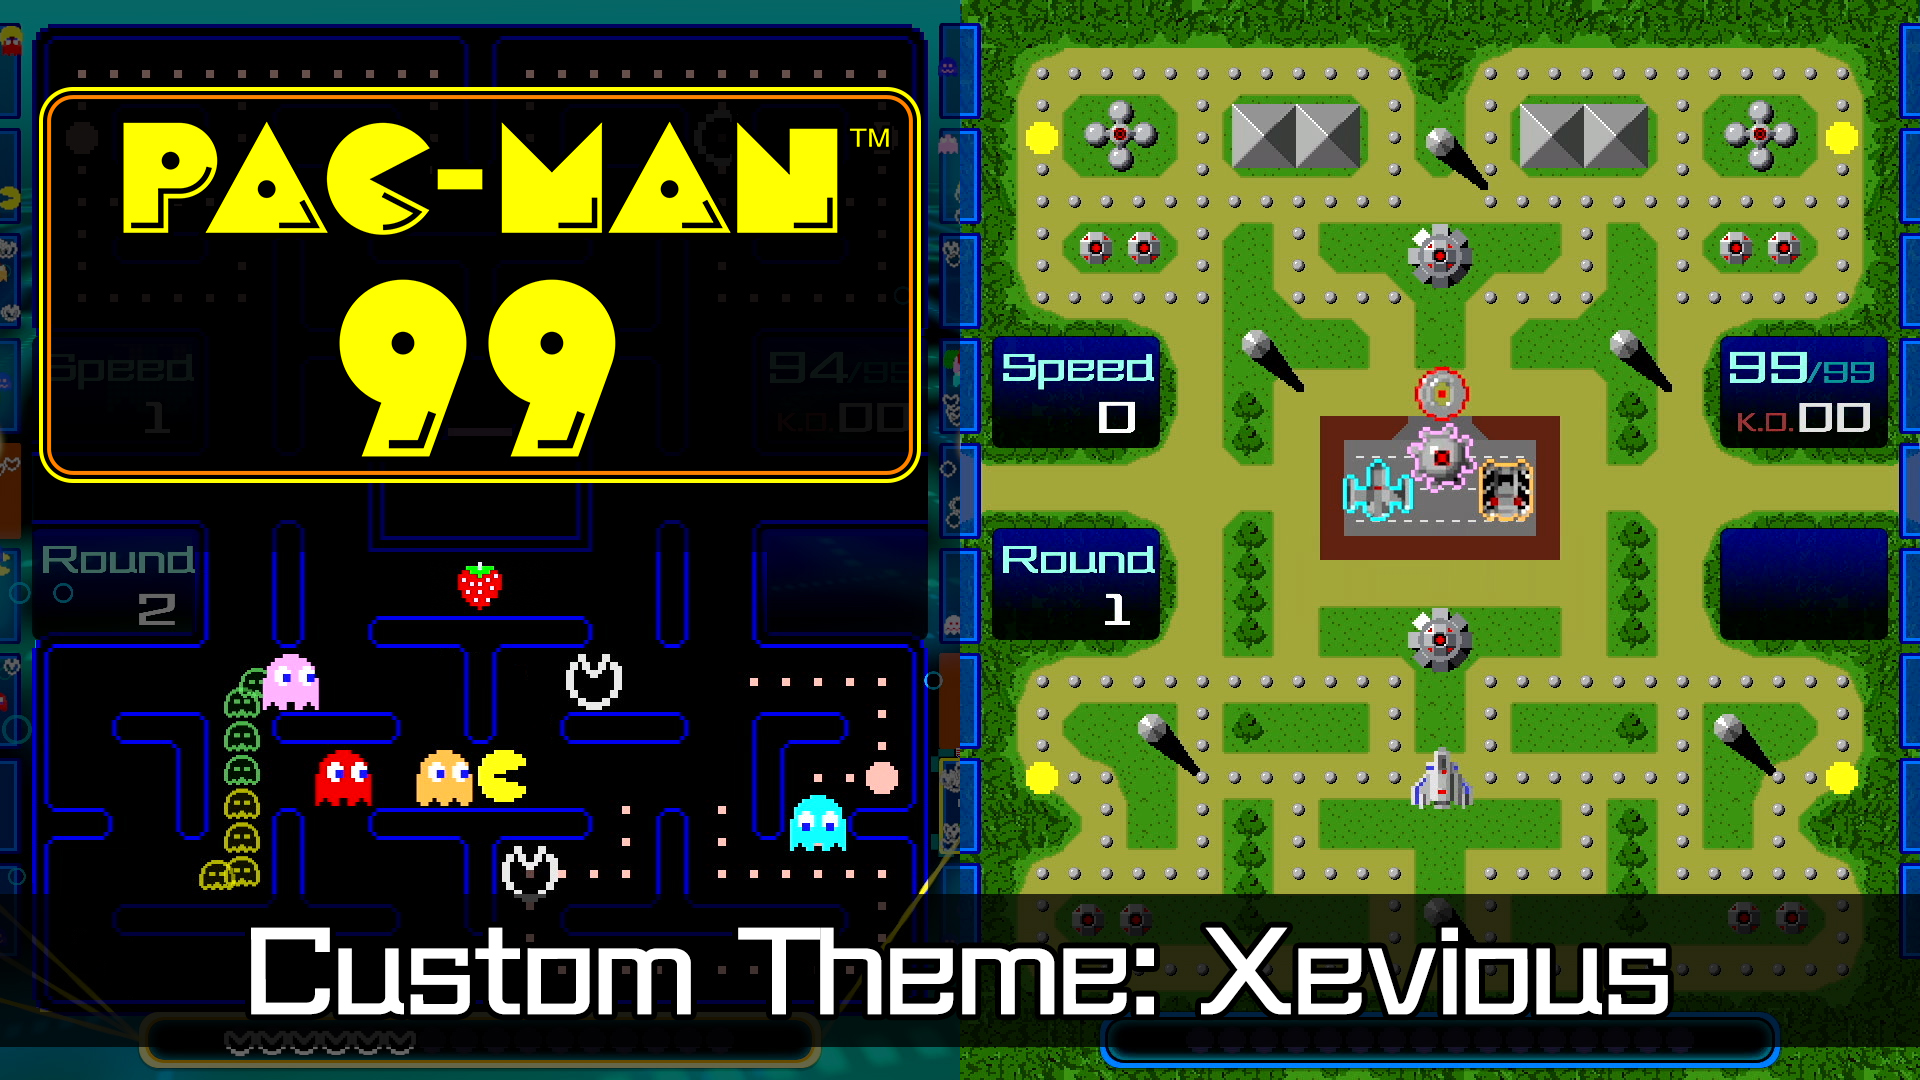 PAC-MAN 99 Custom Theme: Xevious